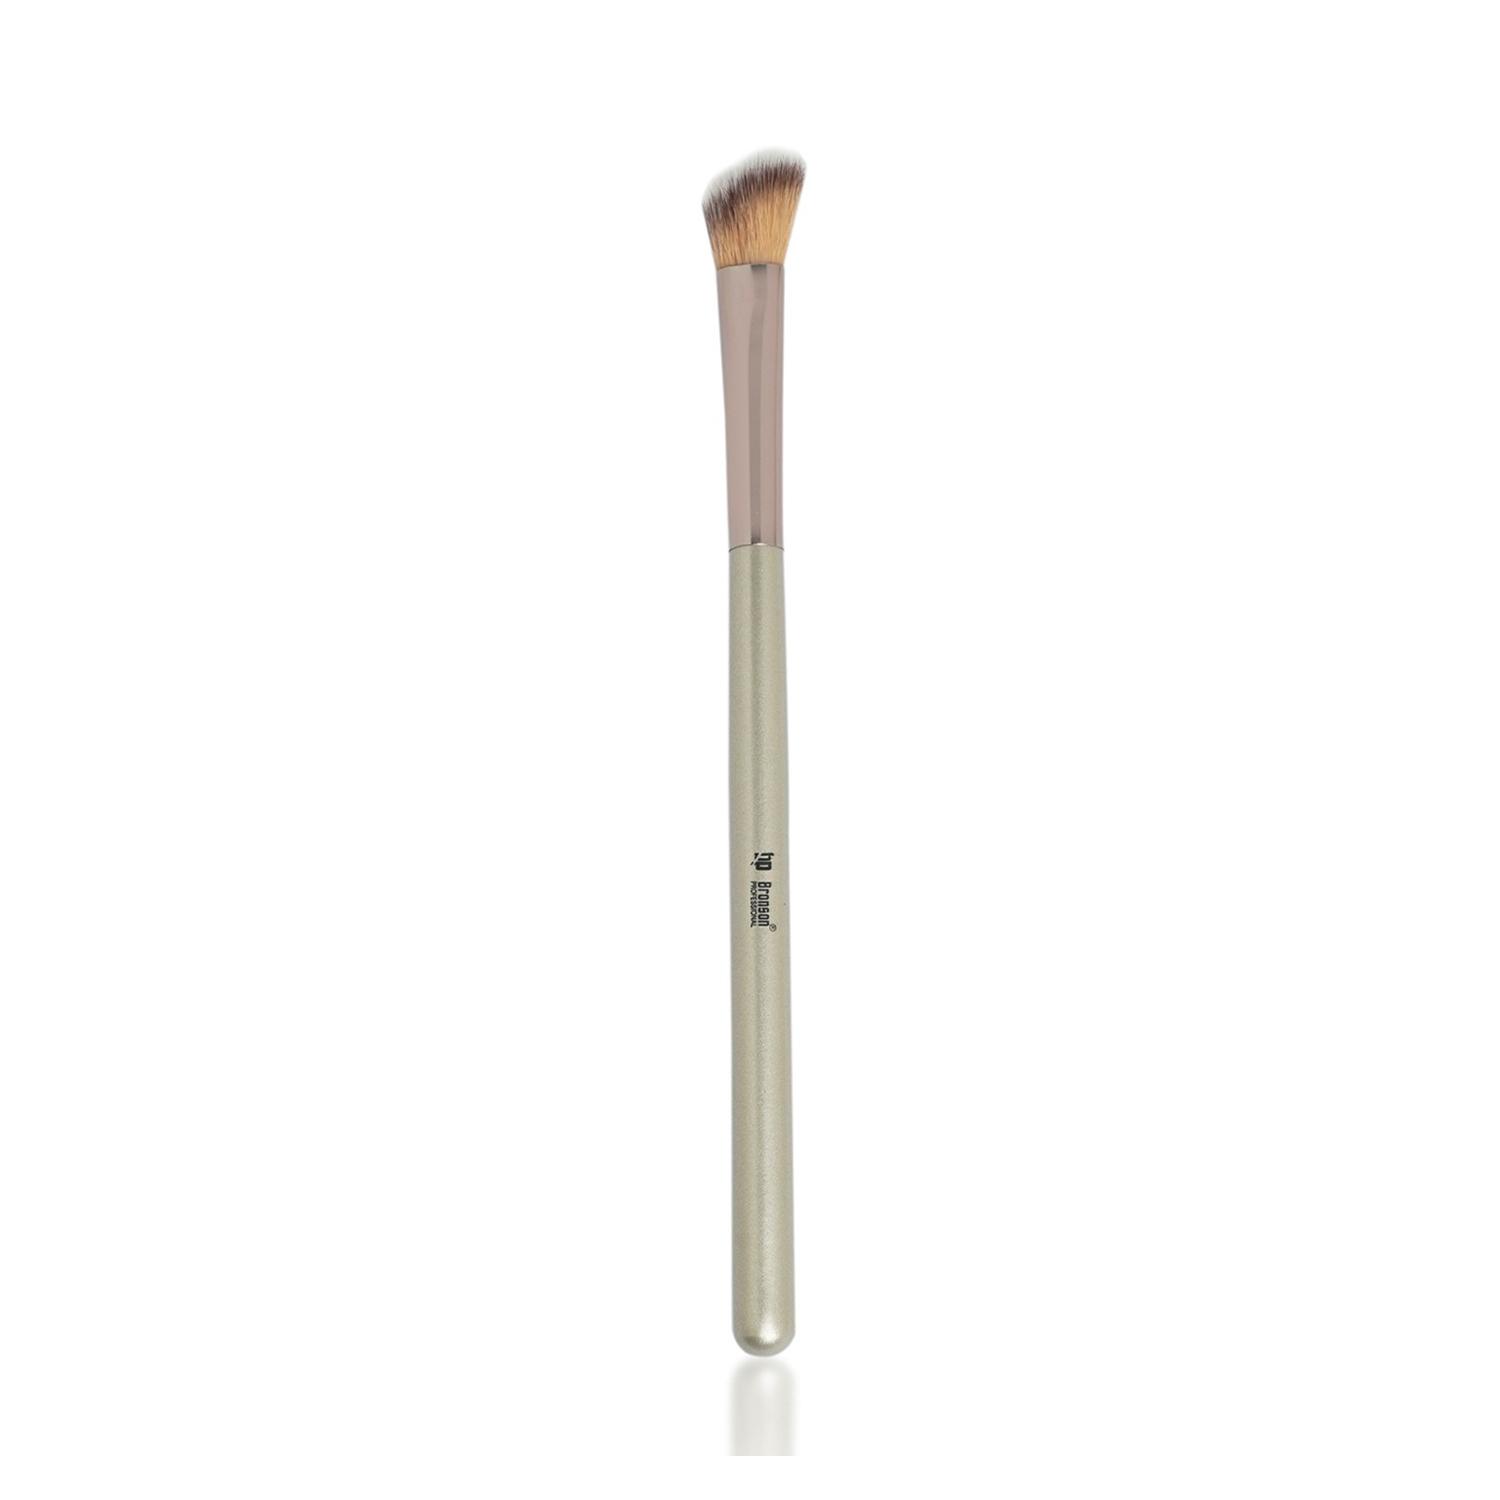 Bronson Professional | Bronson Professional Classic Angled Bronzer & Blusher Makeup Brush - Silver, Pink